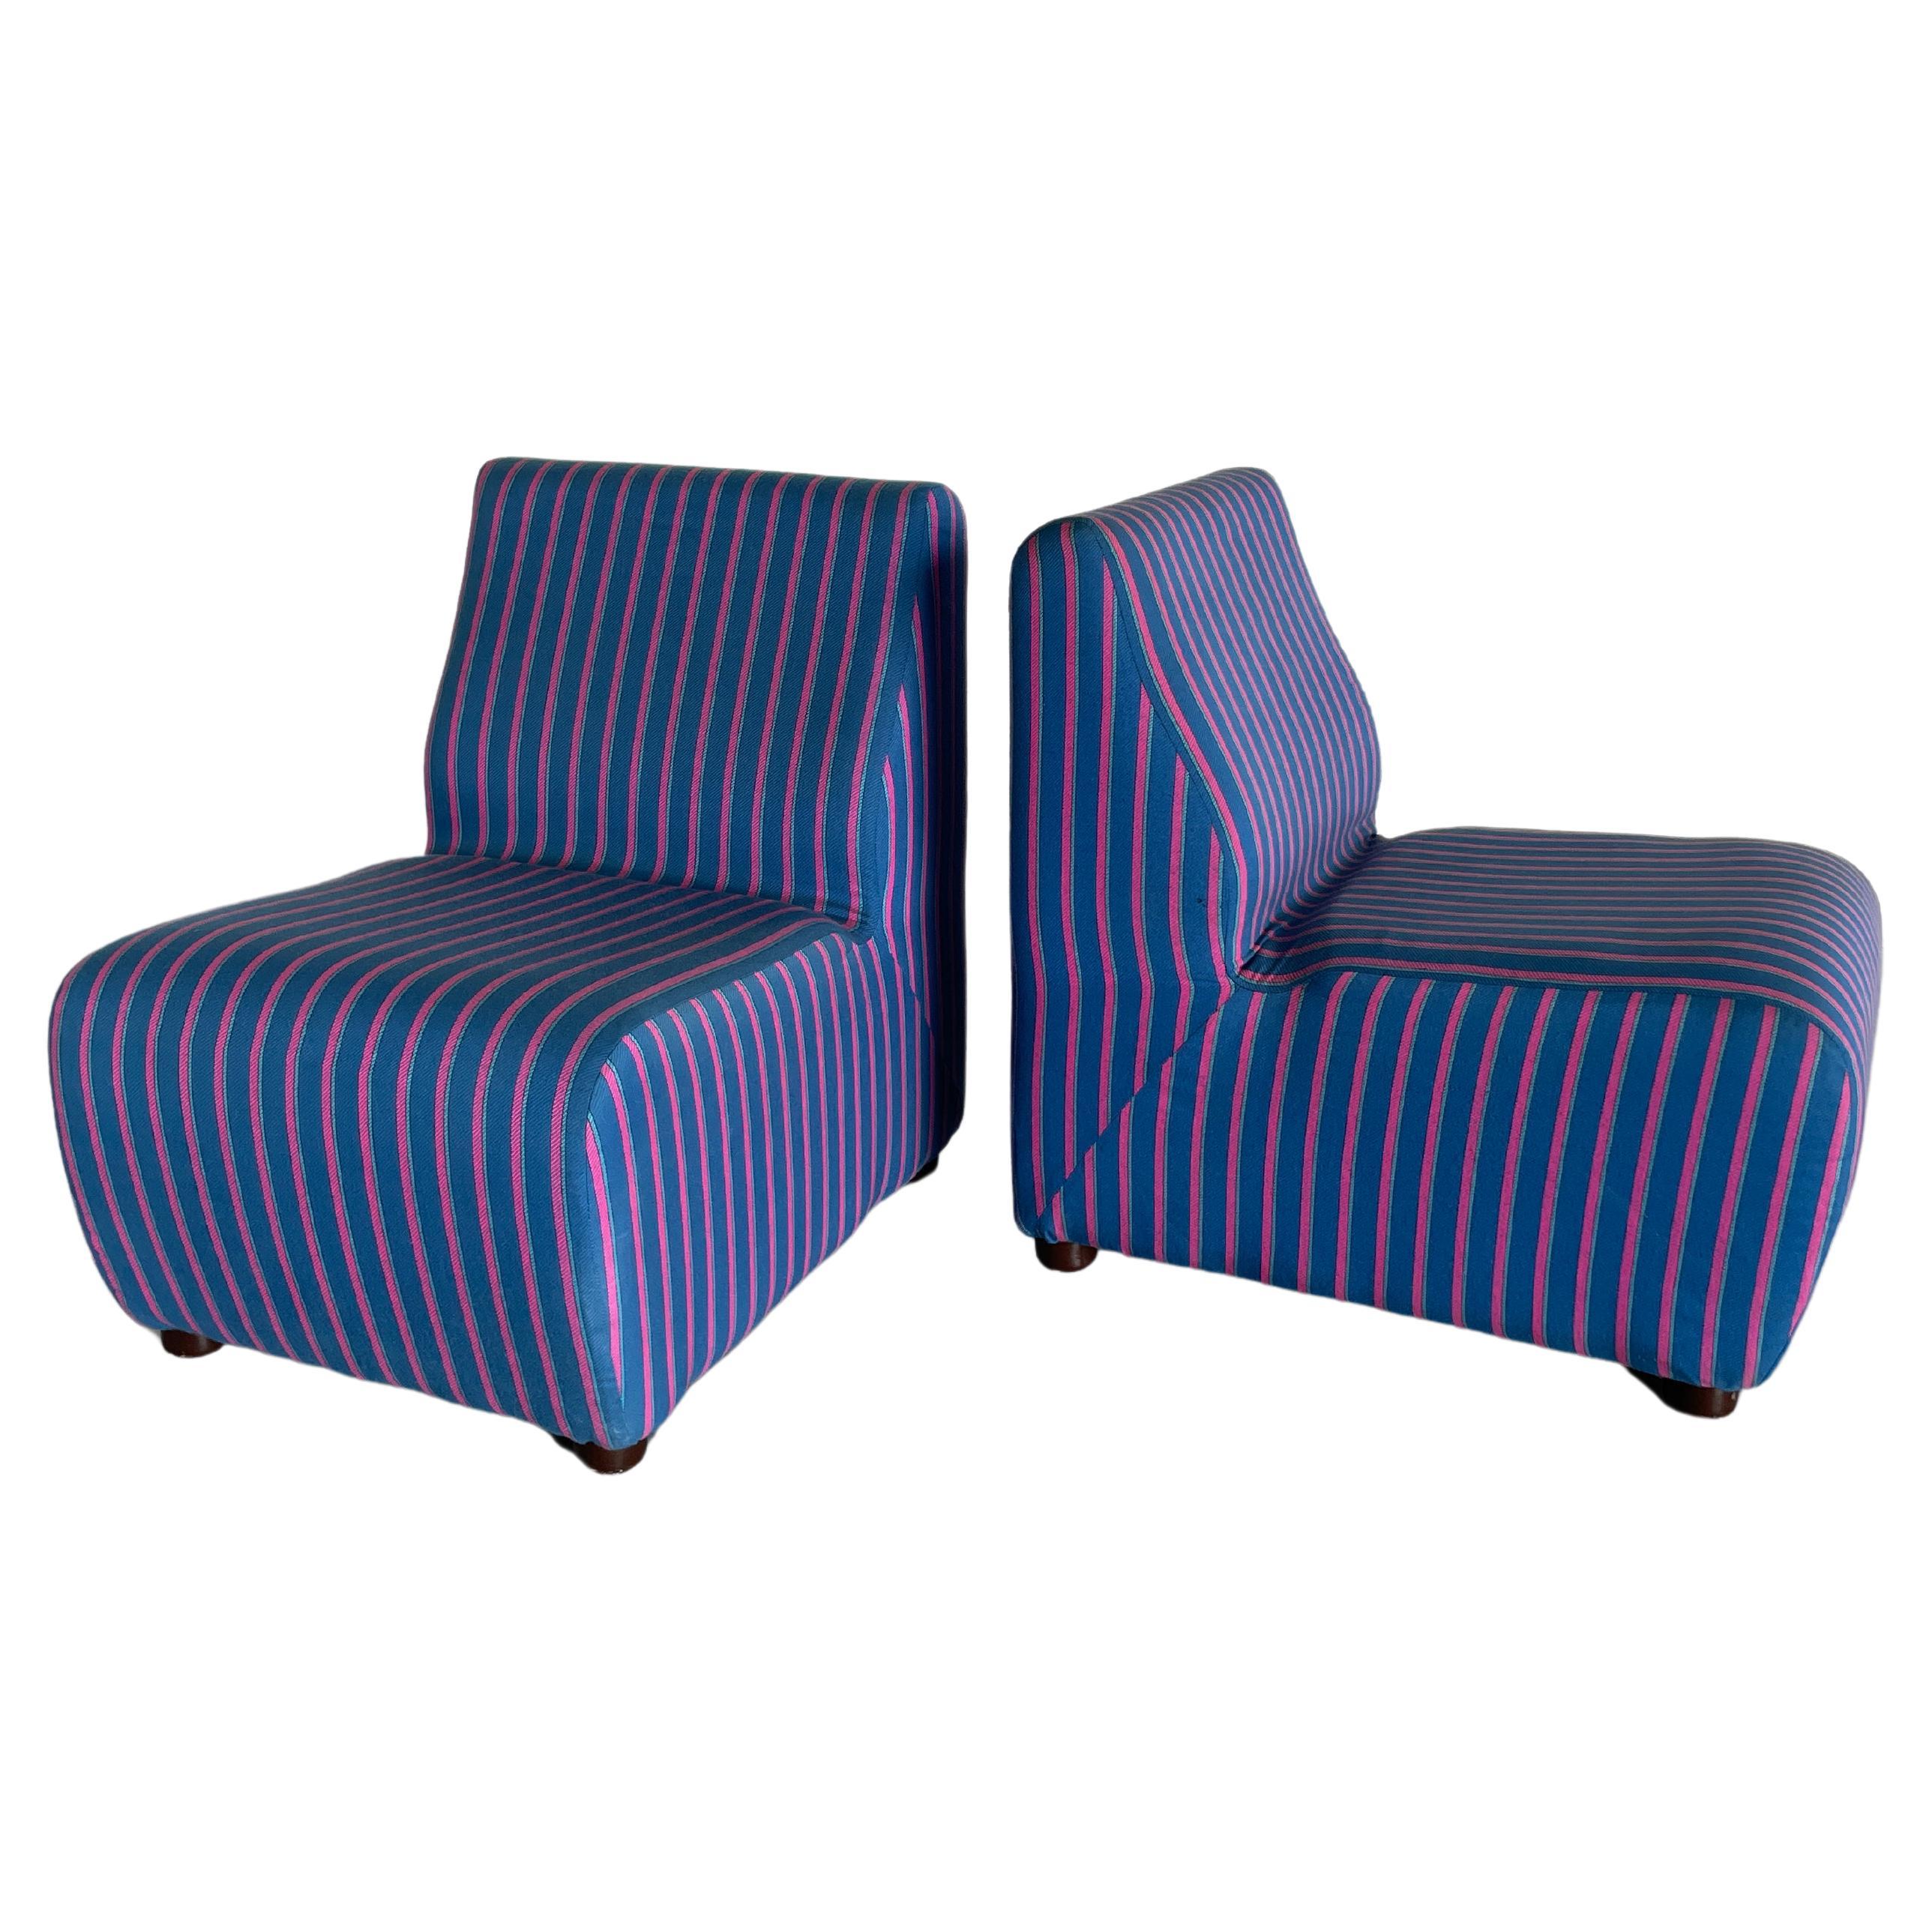 Italian Mid-Century-Modern Modular Sofa Modules in Blue Striped Upholstery, 70s